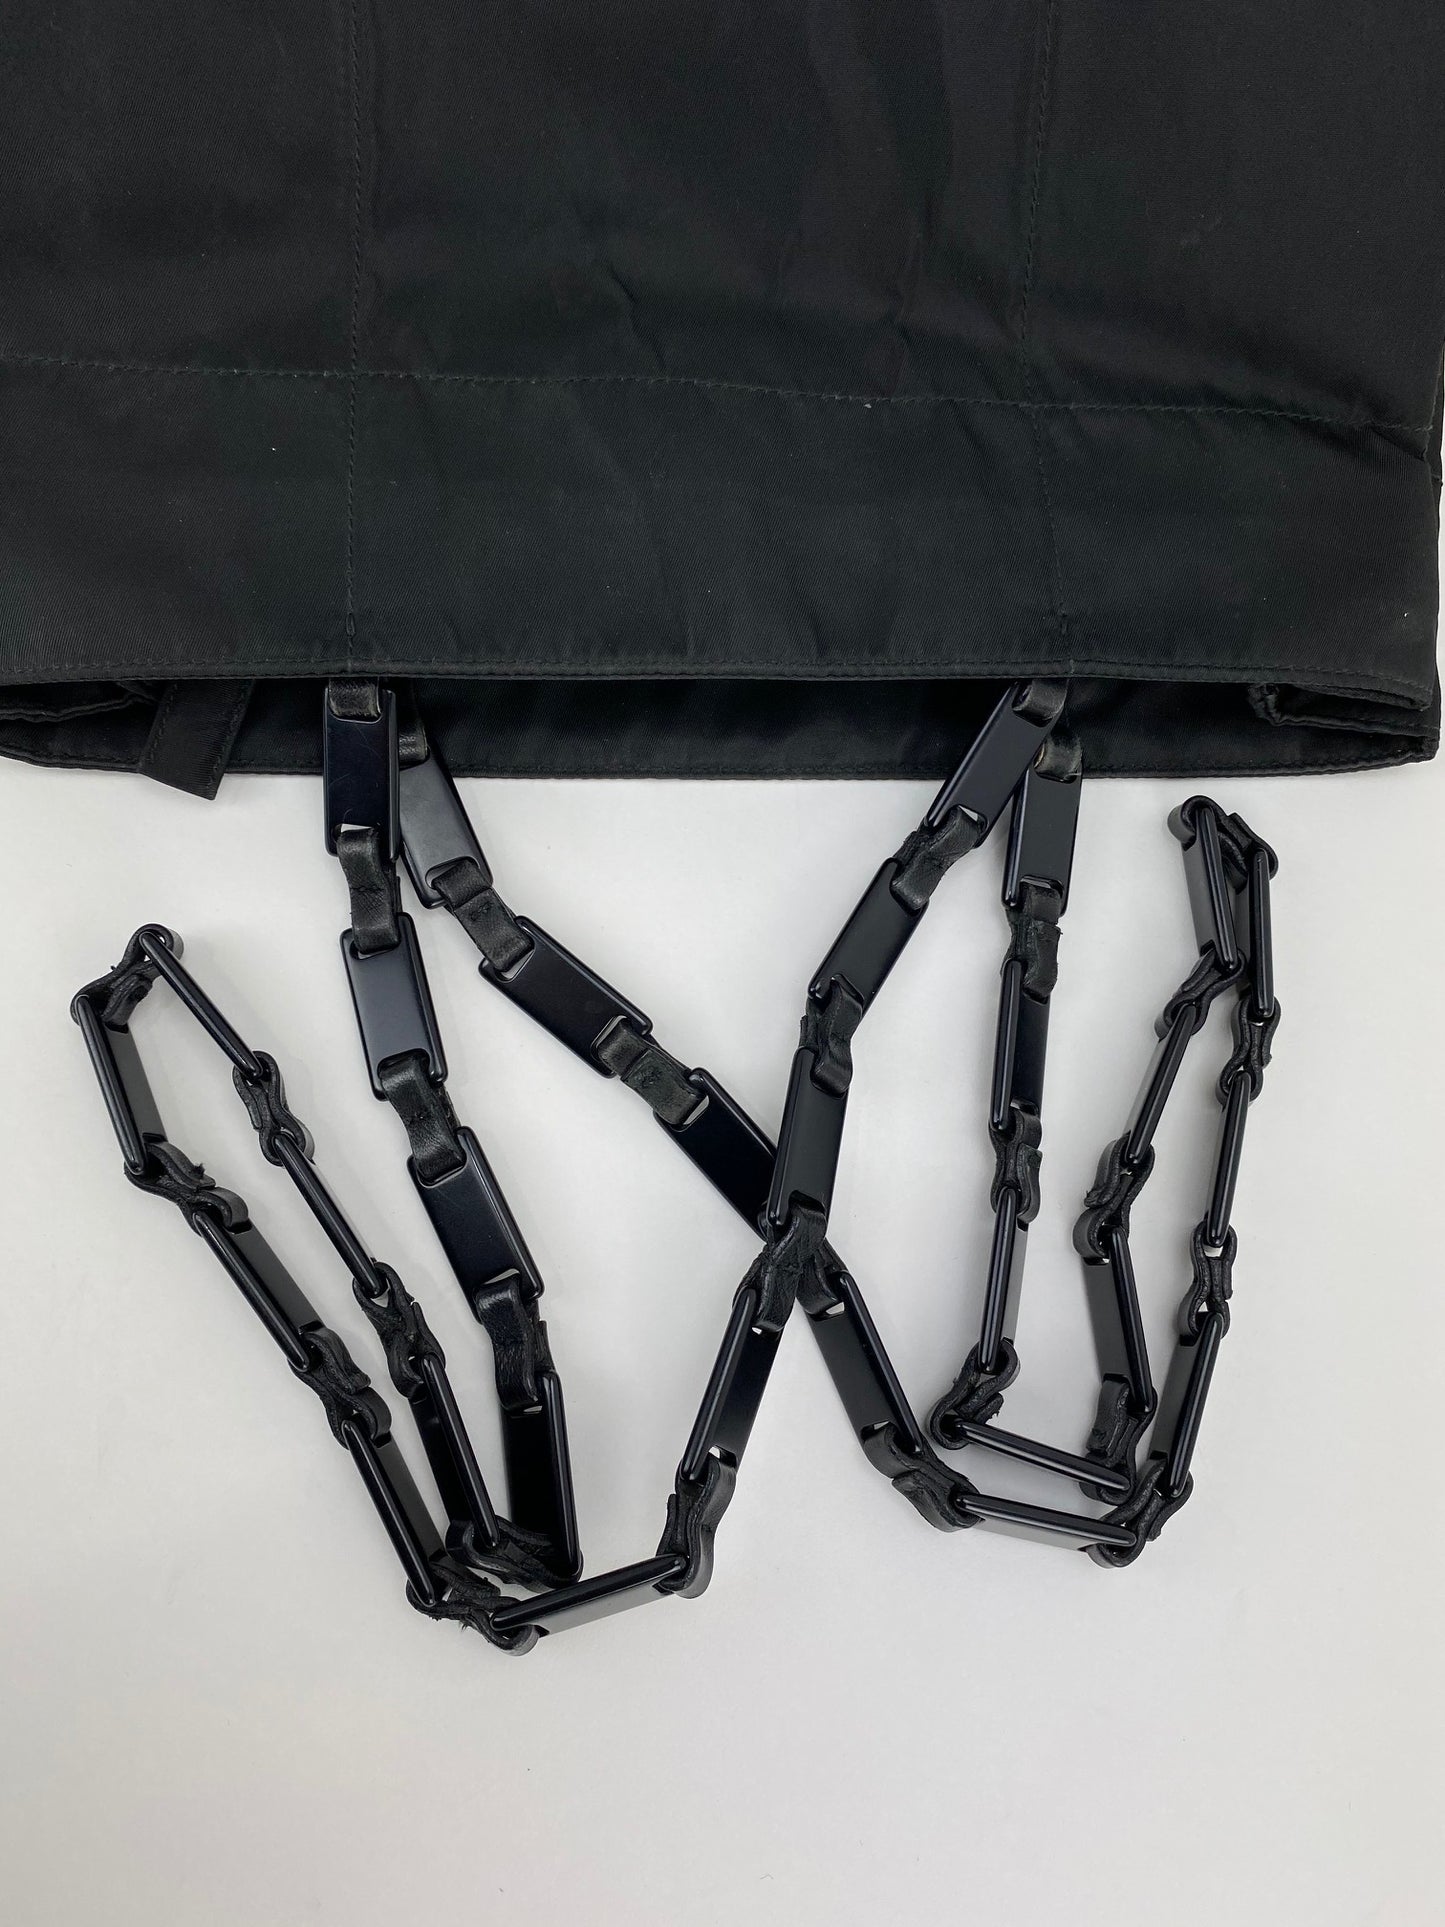 Prada Tessuto nylon tote with chain strap Shoulder Bag pre owned